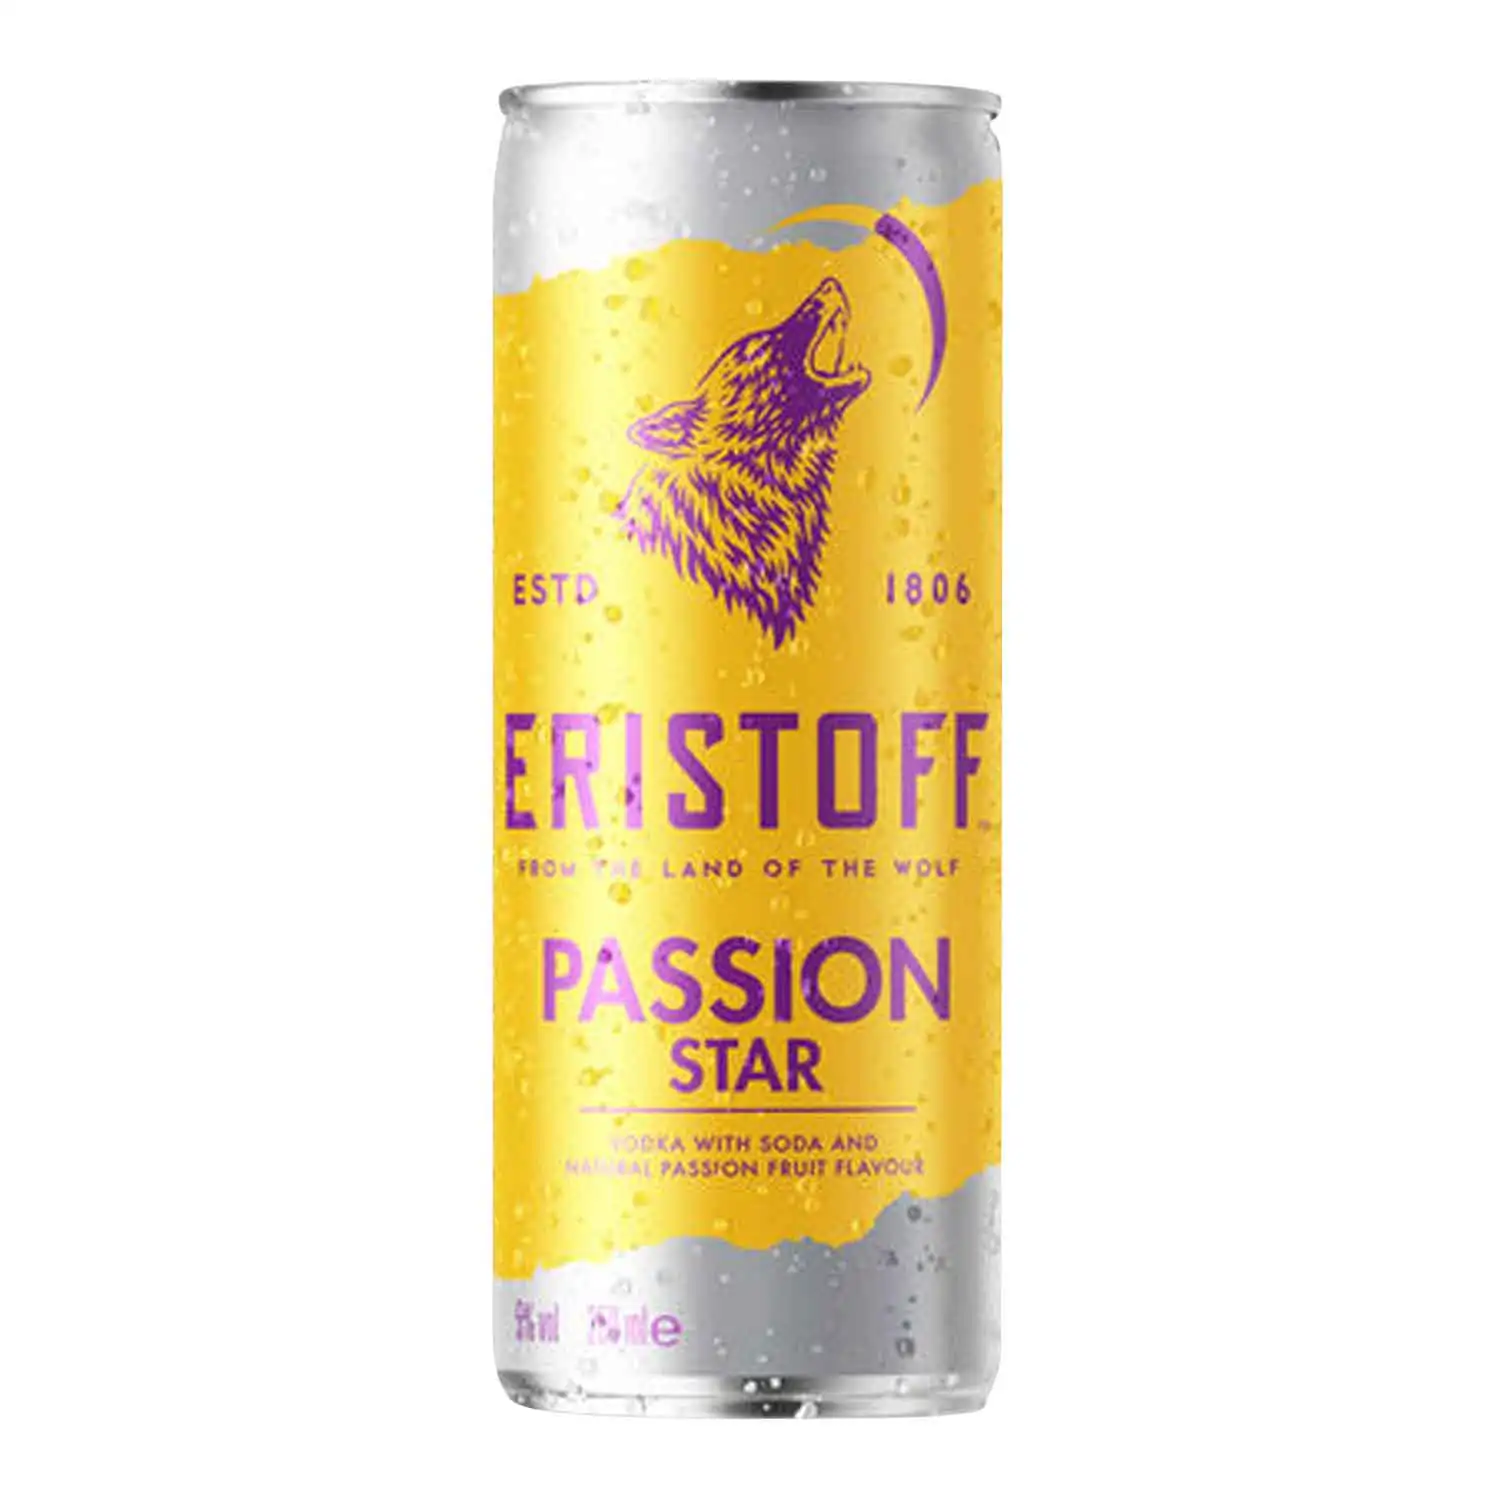 Eristoff passion star 25cl Alc 5%